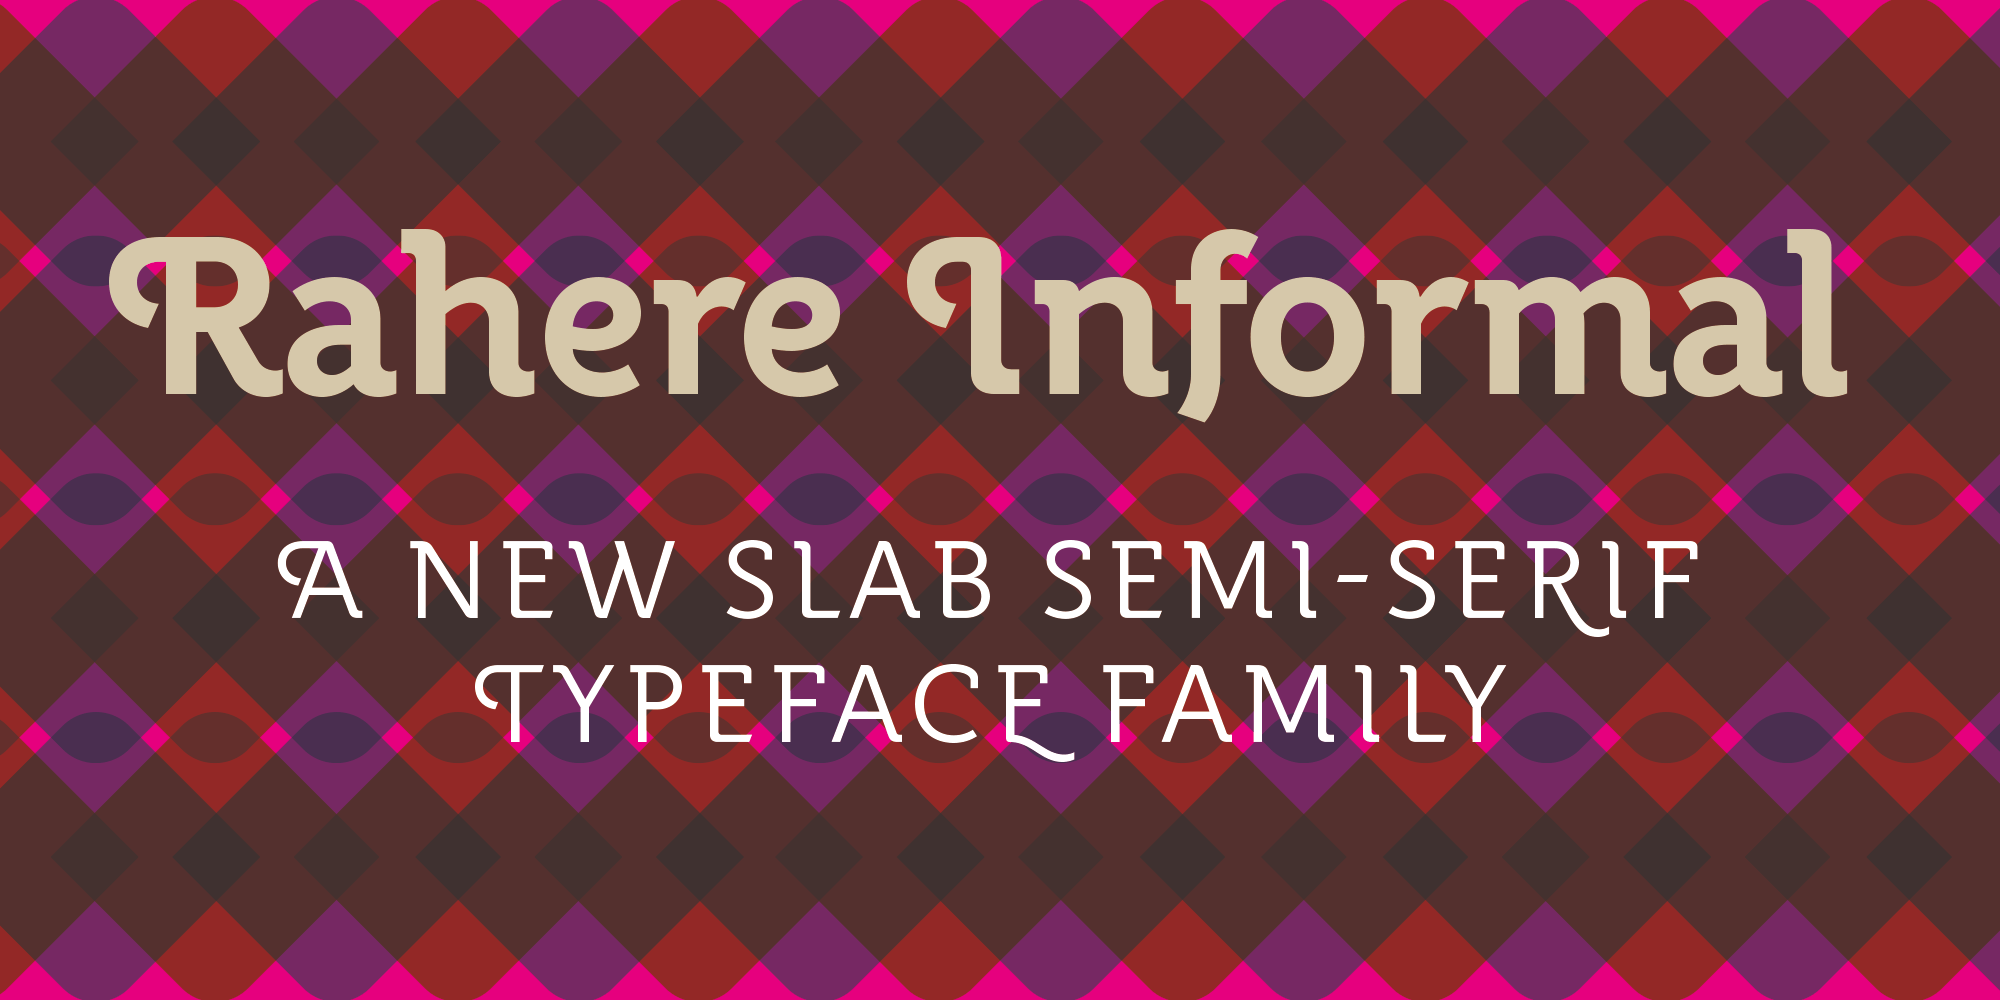 Rahere Informal - a new slab semi-serif typeface family